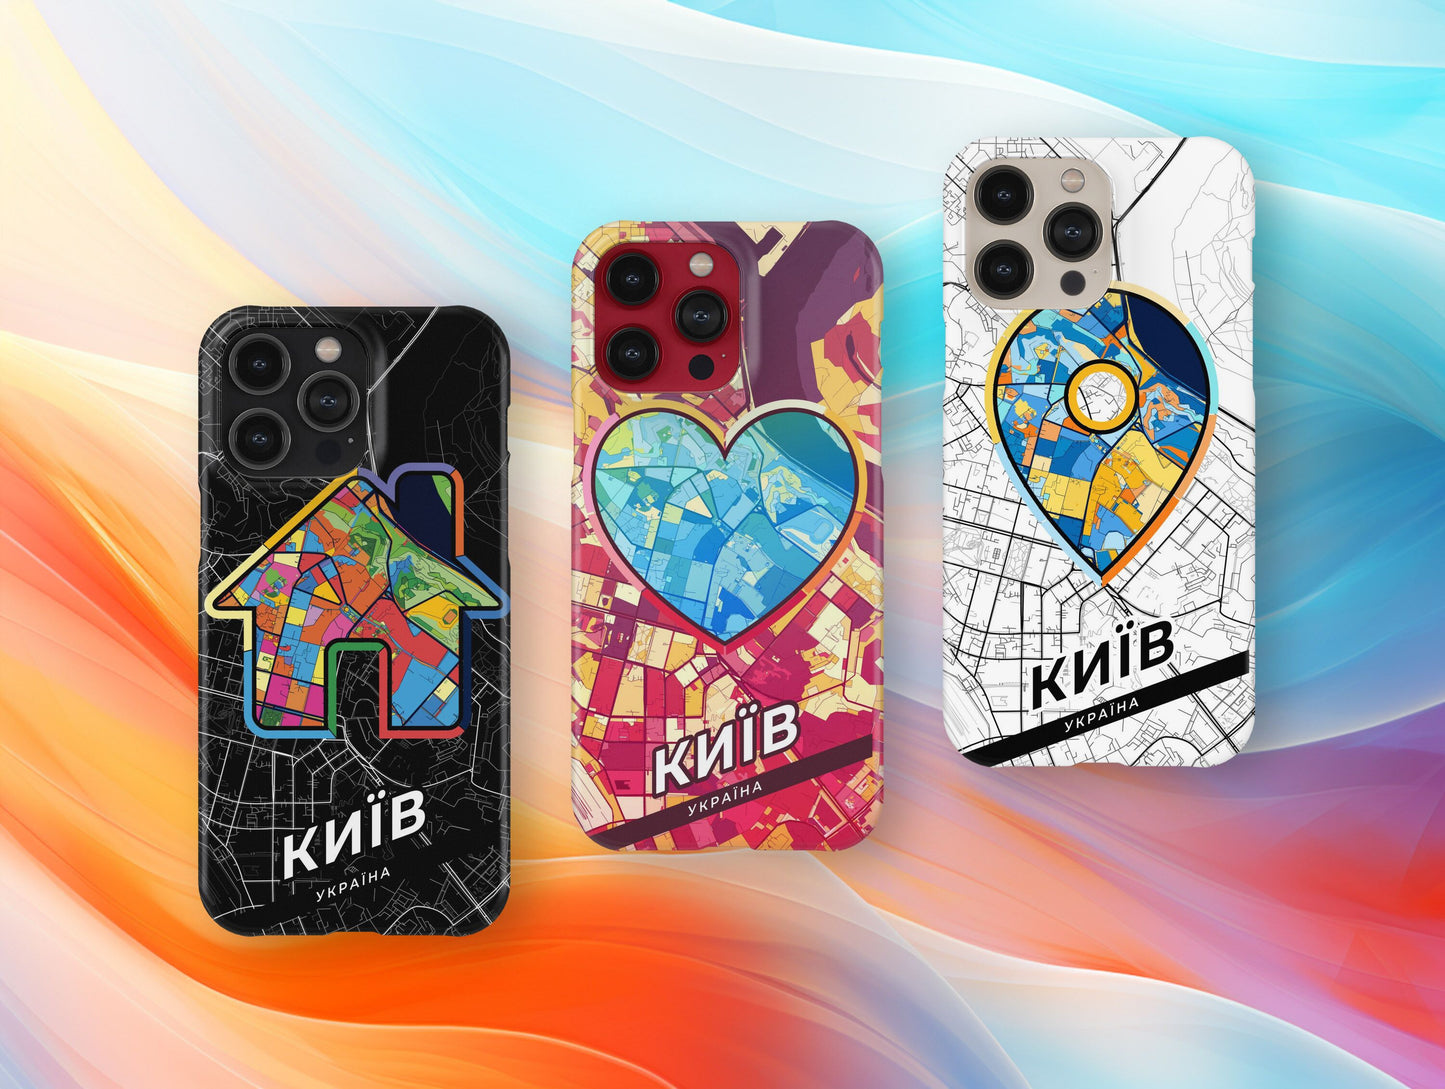 Kiev Ukraine slim phone case with colorful icon. Birthday, wedding or housewarming gift. Couple match cases.